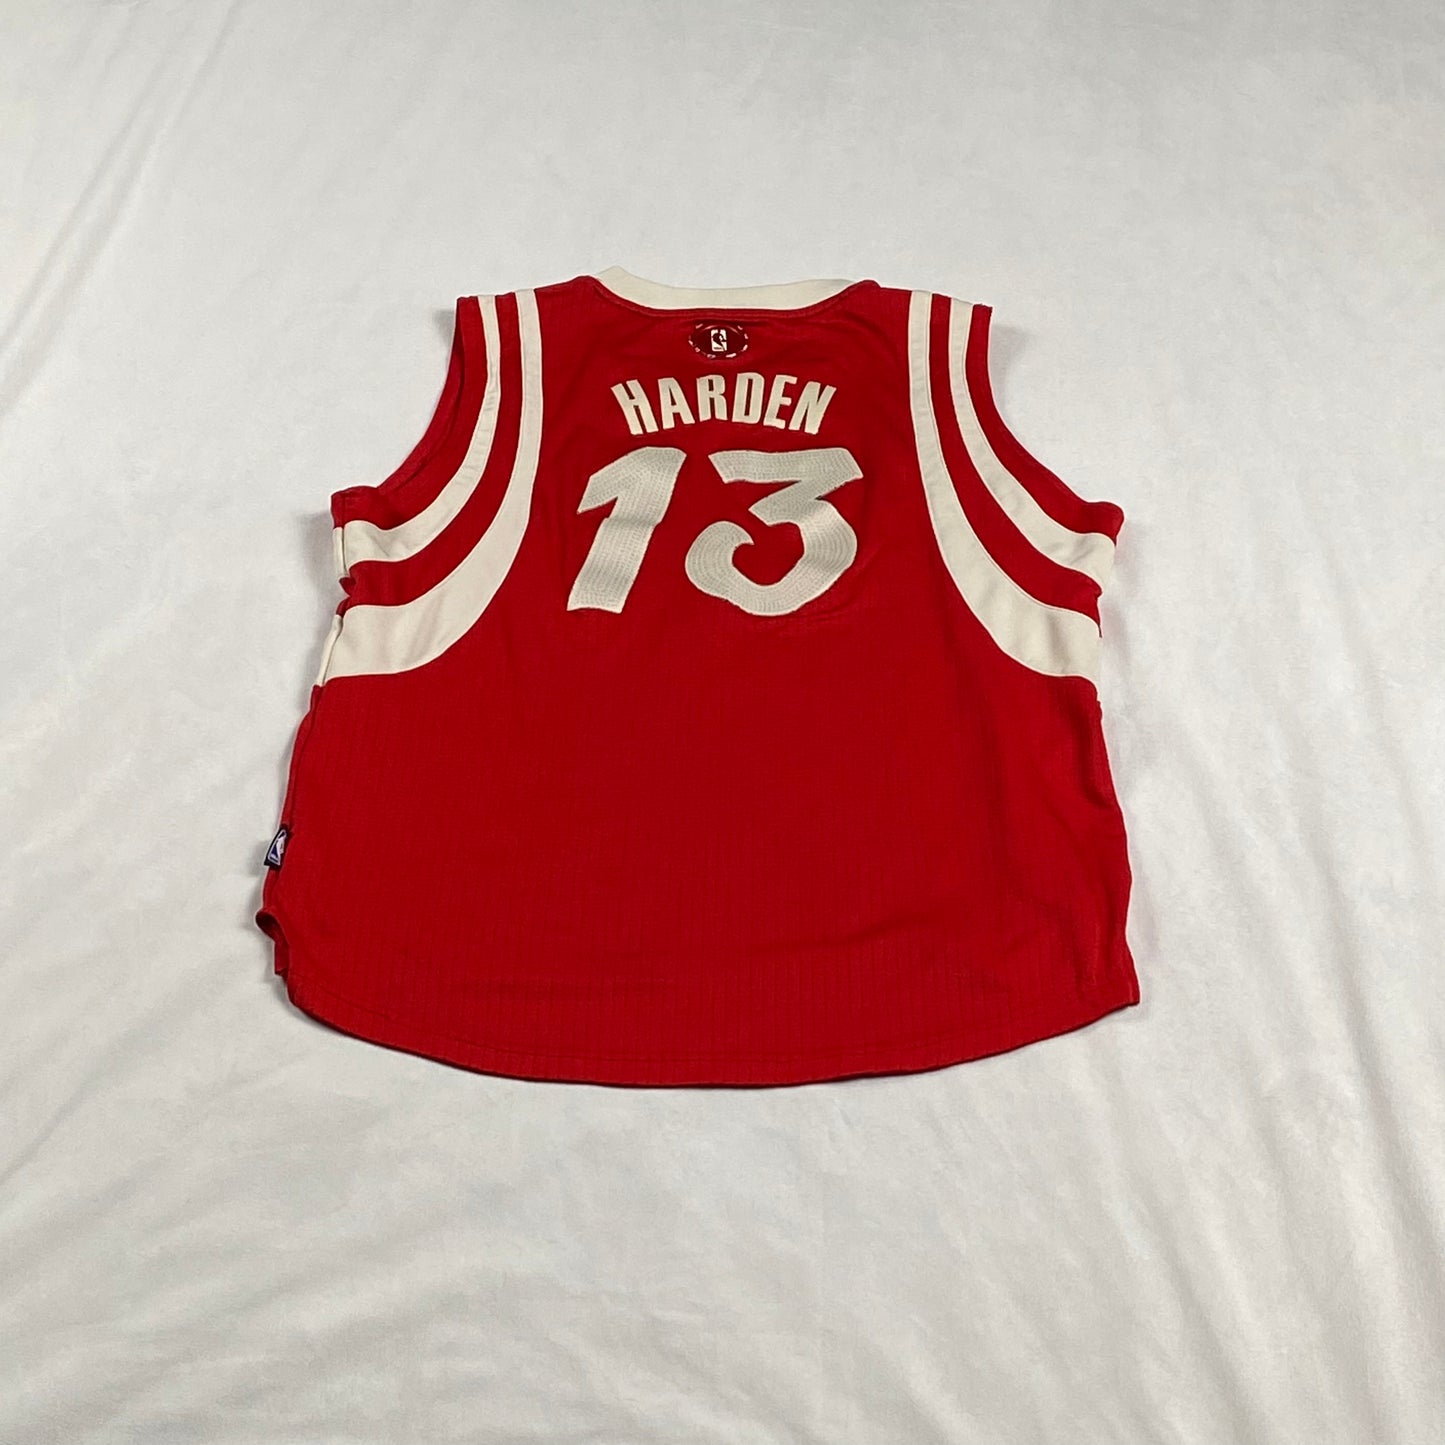 Houston Rockets James Harden Adidas Swingman NBA Basketball Jersey